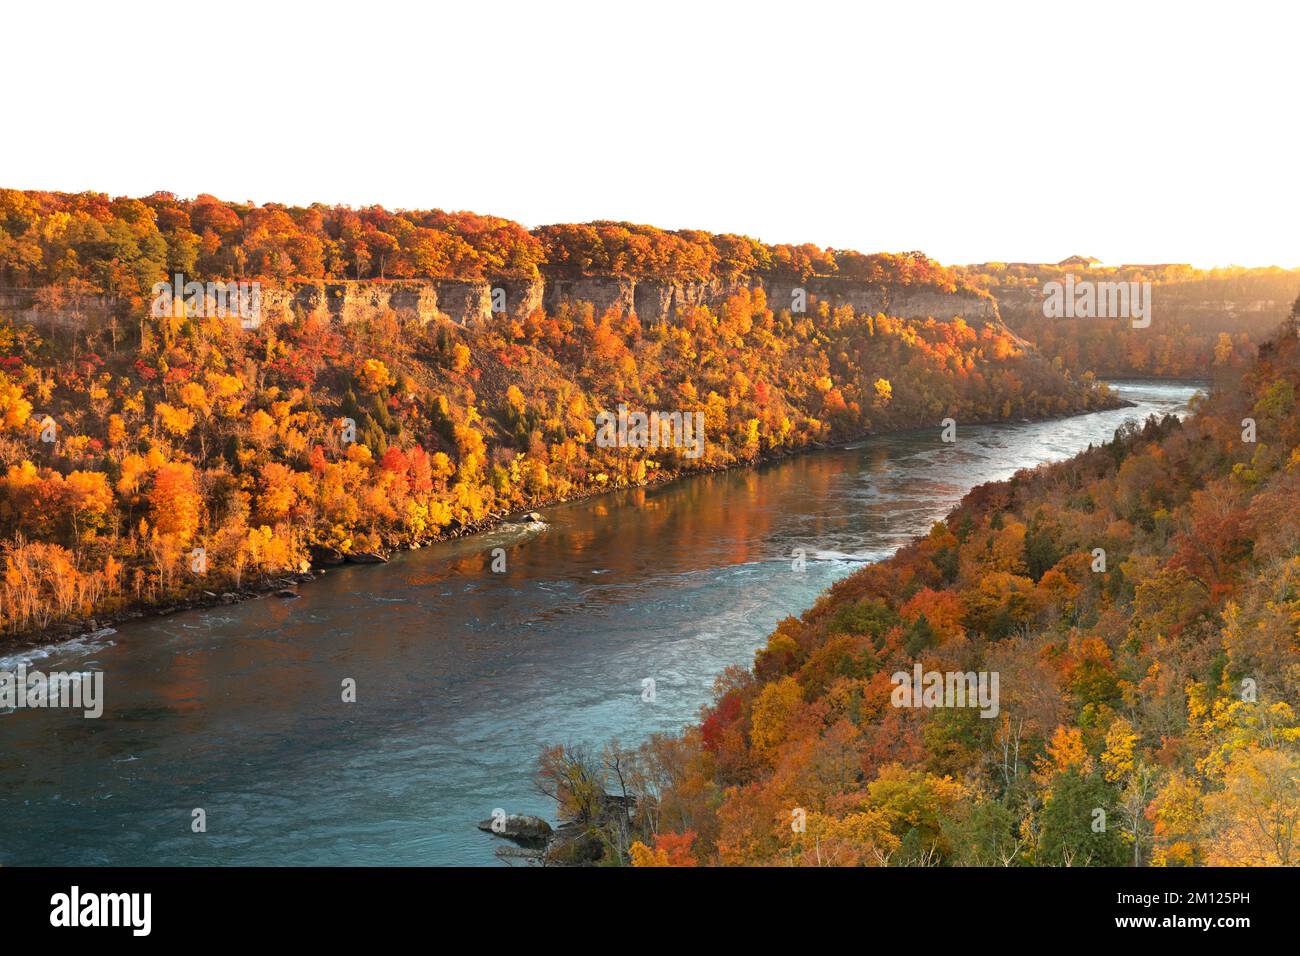 Canada, Ontario, Niagara Falls, The Niagara Gorge with the Niagara River in Autumn with full fall colors Stock Photo